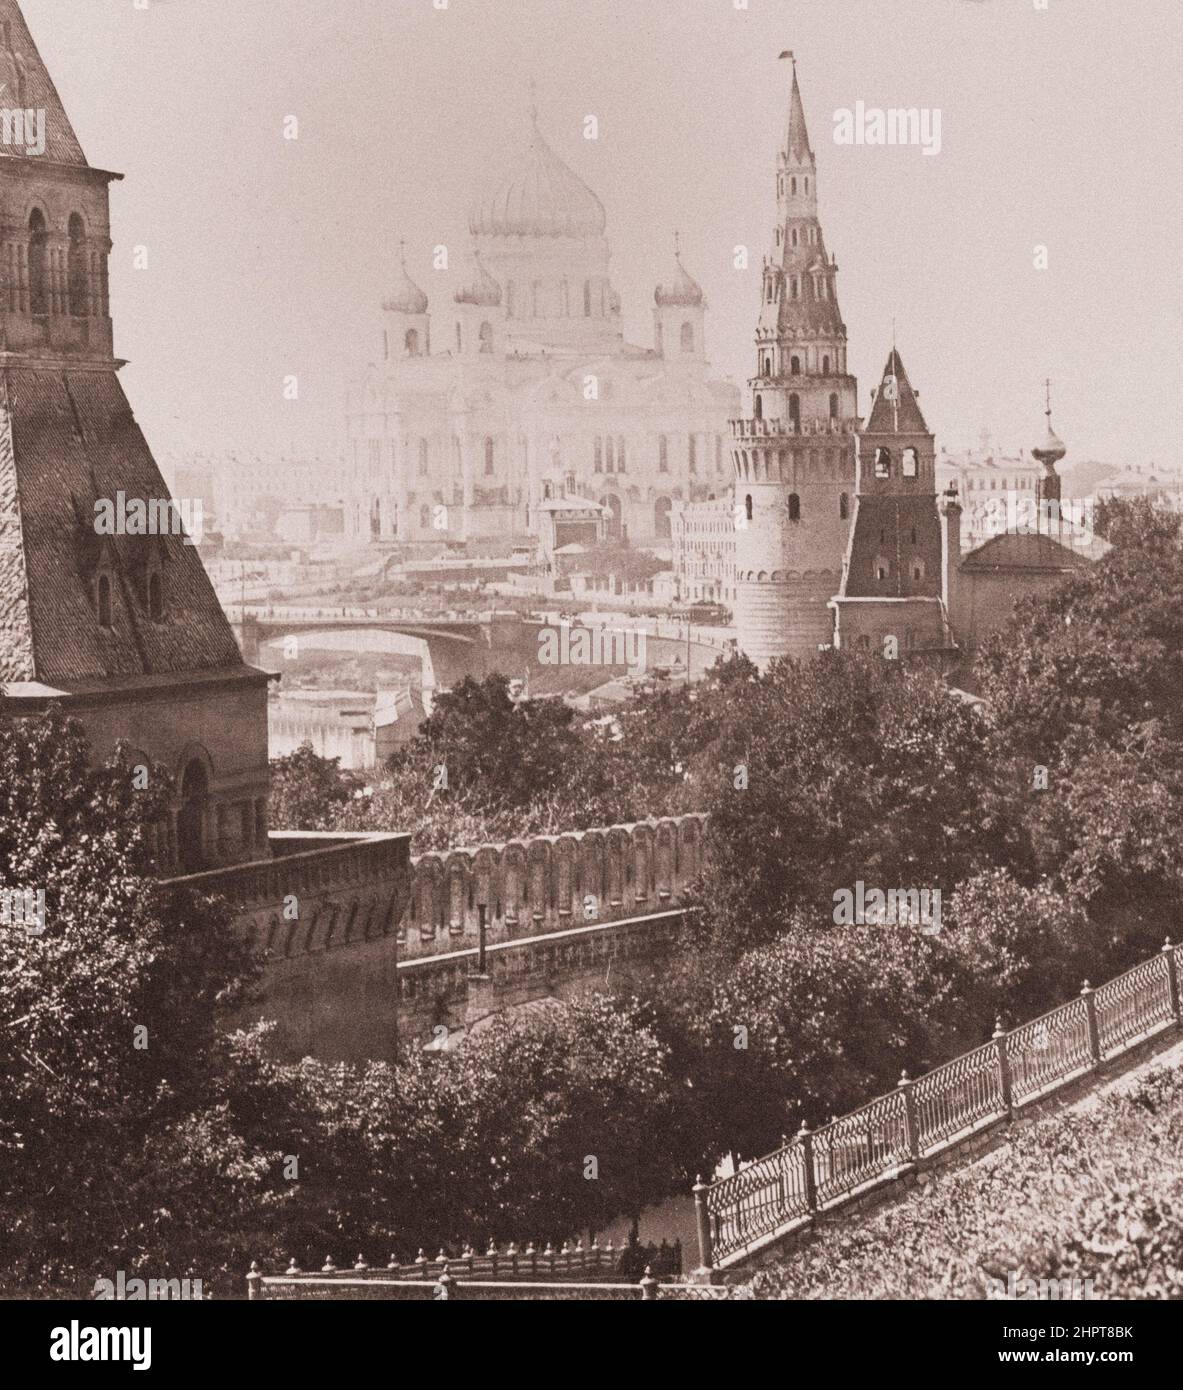 Vintage photo of the Moscow Kremlin with Vodovzvodnaya, Blagoveschenskaya, Taynitskaya towers and Cathedral of Christ the Saviour on the background. R Stock Photo